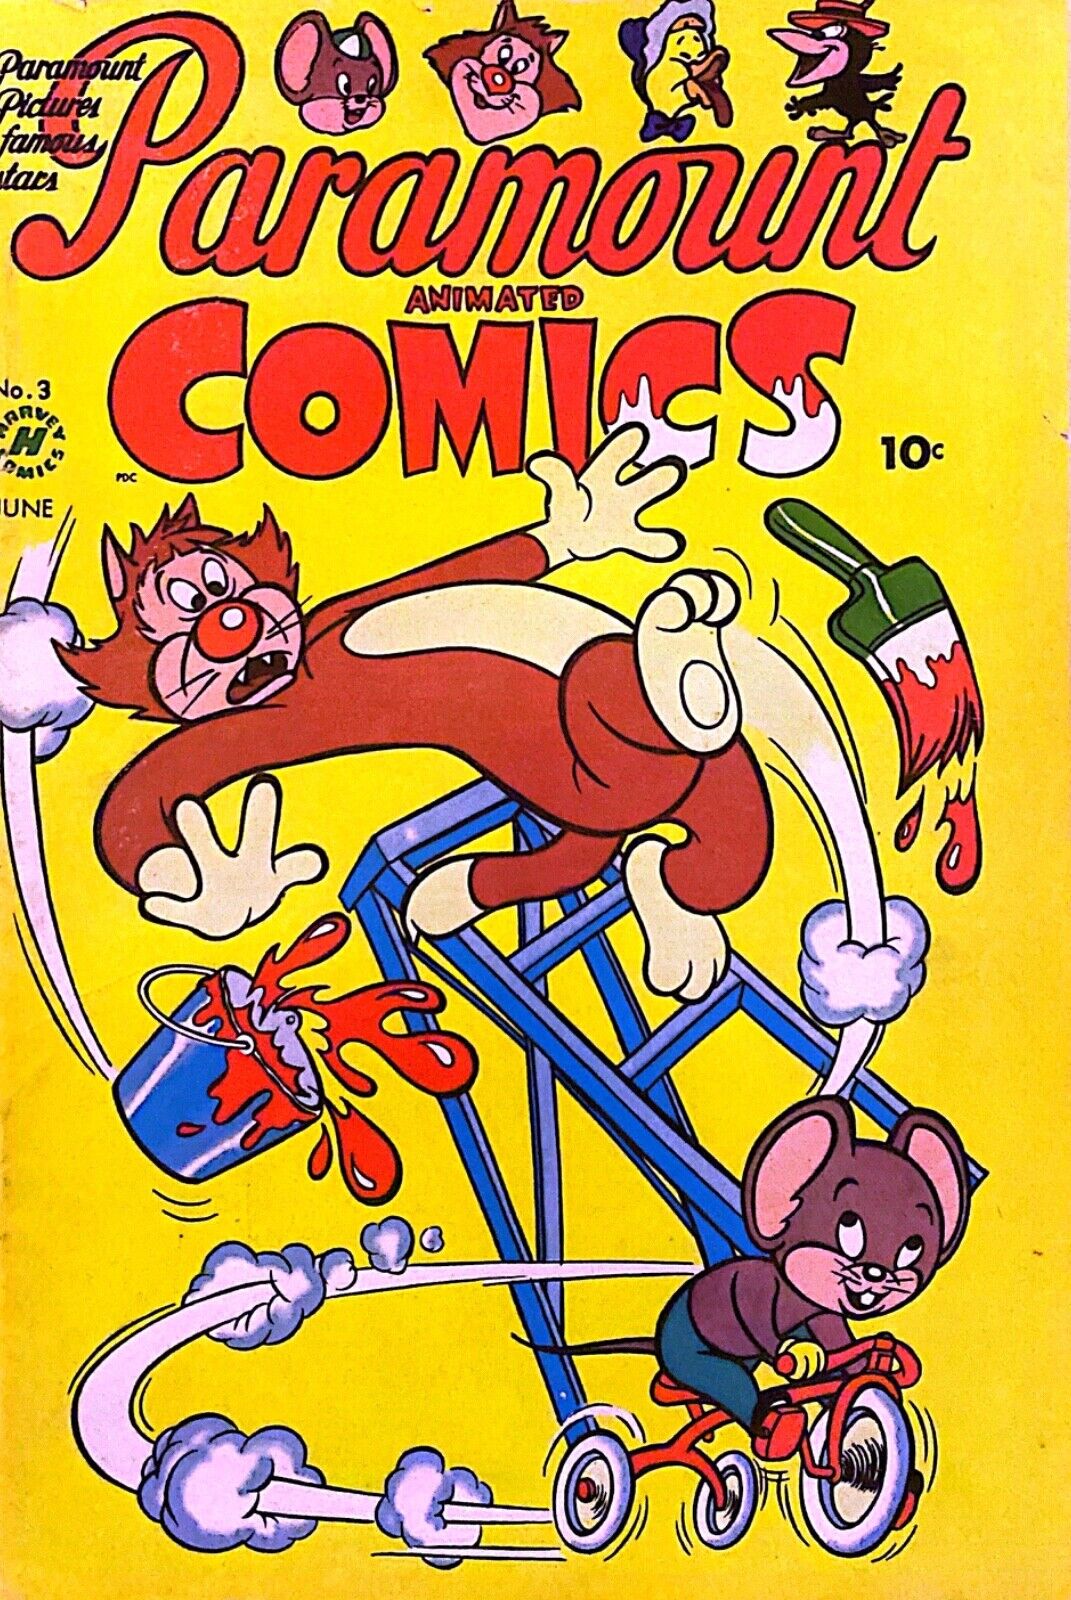 Paramount Animated Comics #3 by Harvey Comics (1953) - Very good+ (4.5)